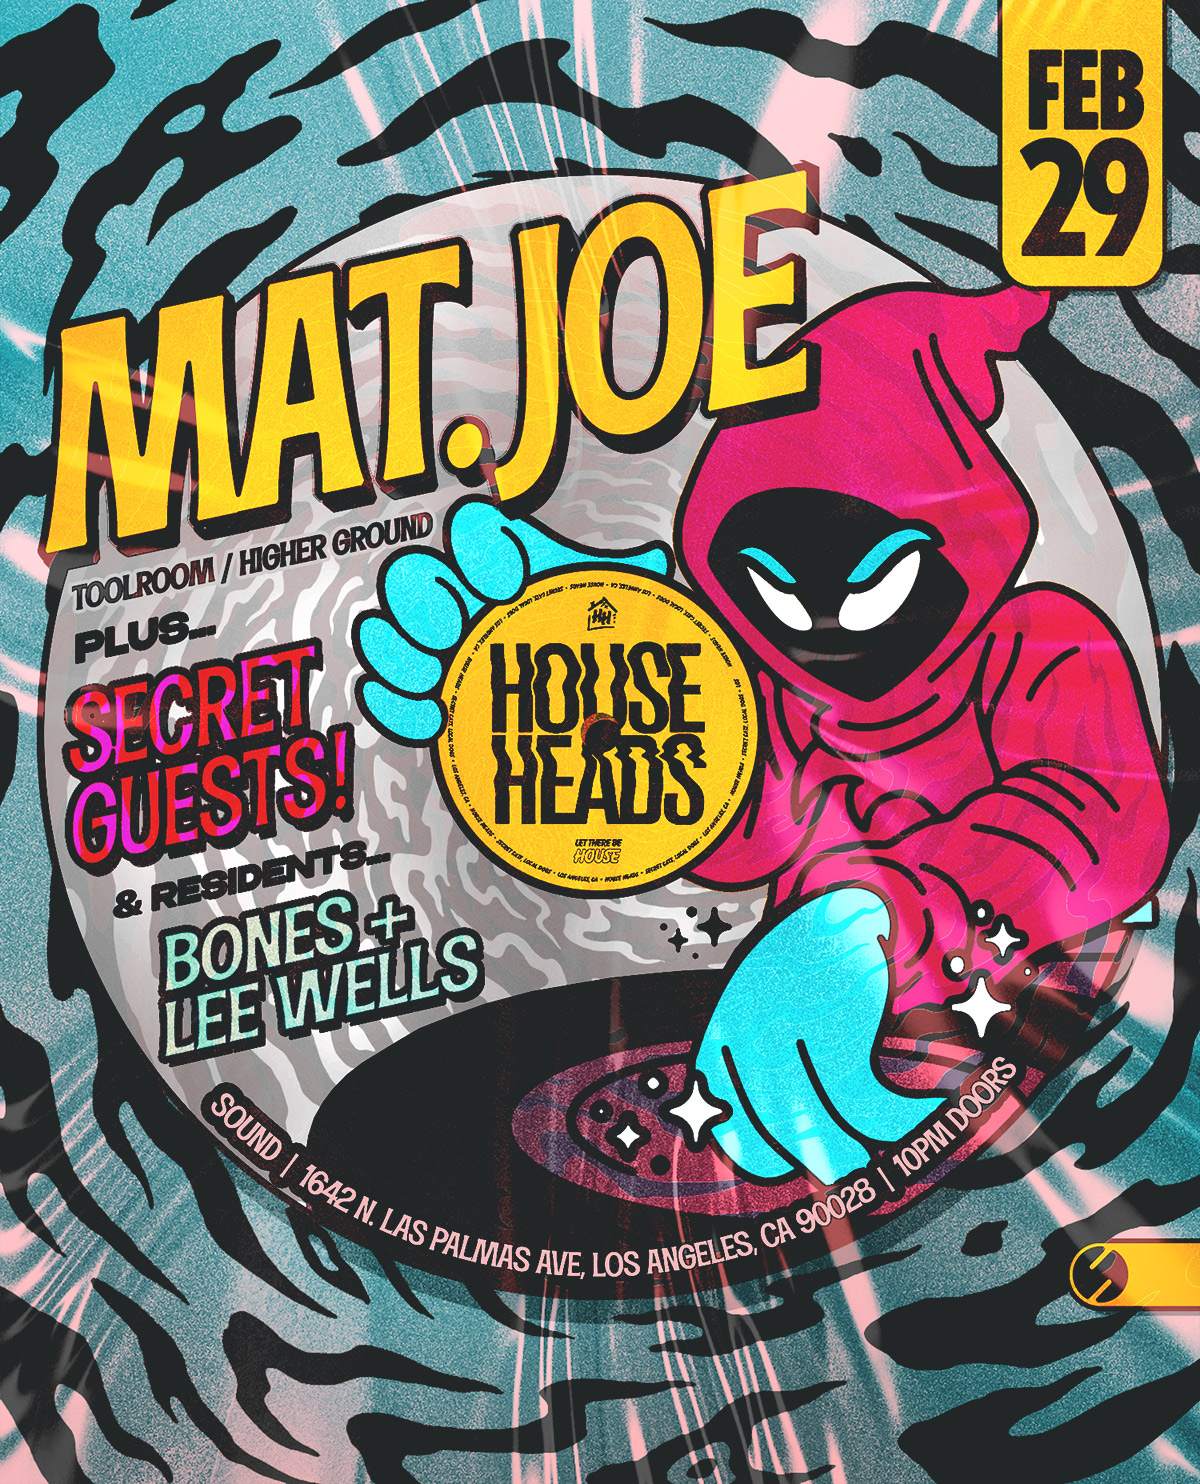 House Heads feat. Mat.Joe (Toolroom / Higher Ground) - Página frontal